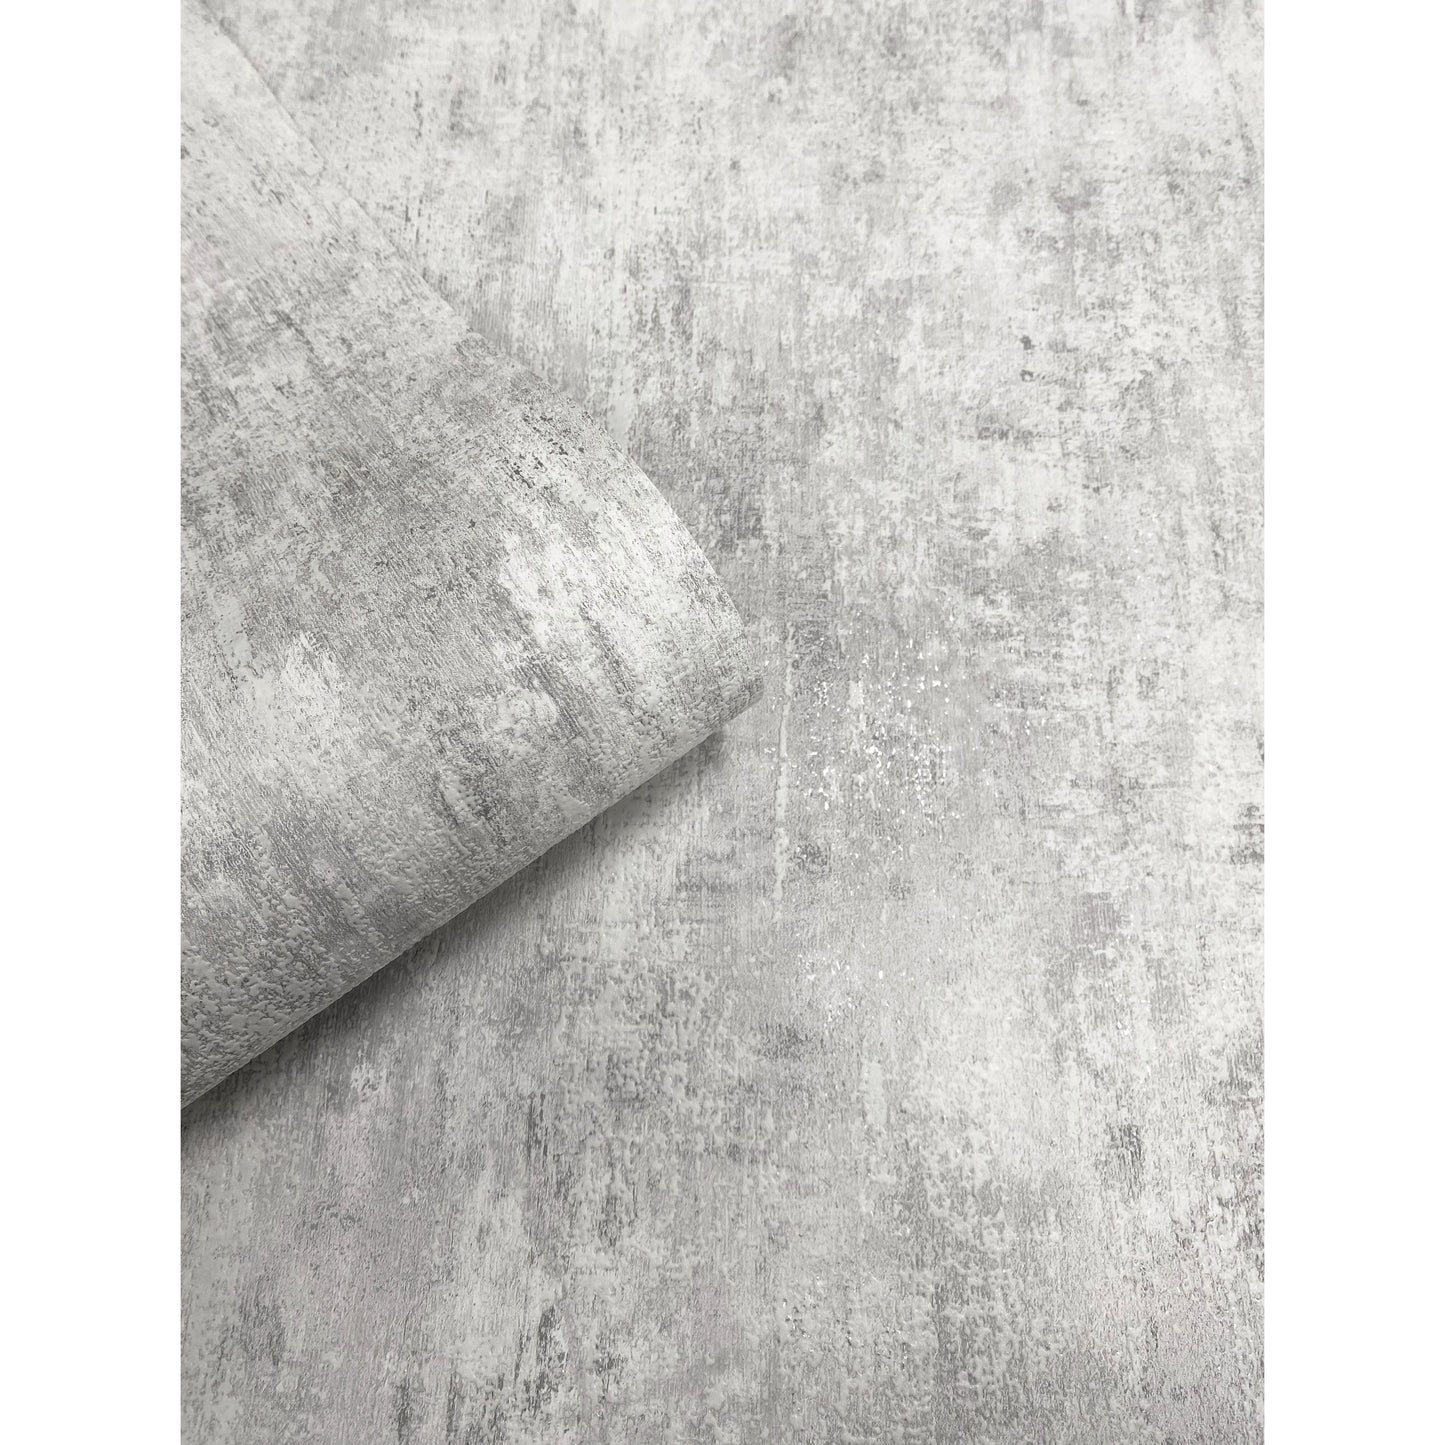 Muriva Phelan Texture Grey Wallpaper (209101)